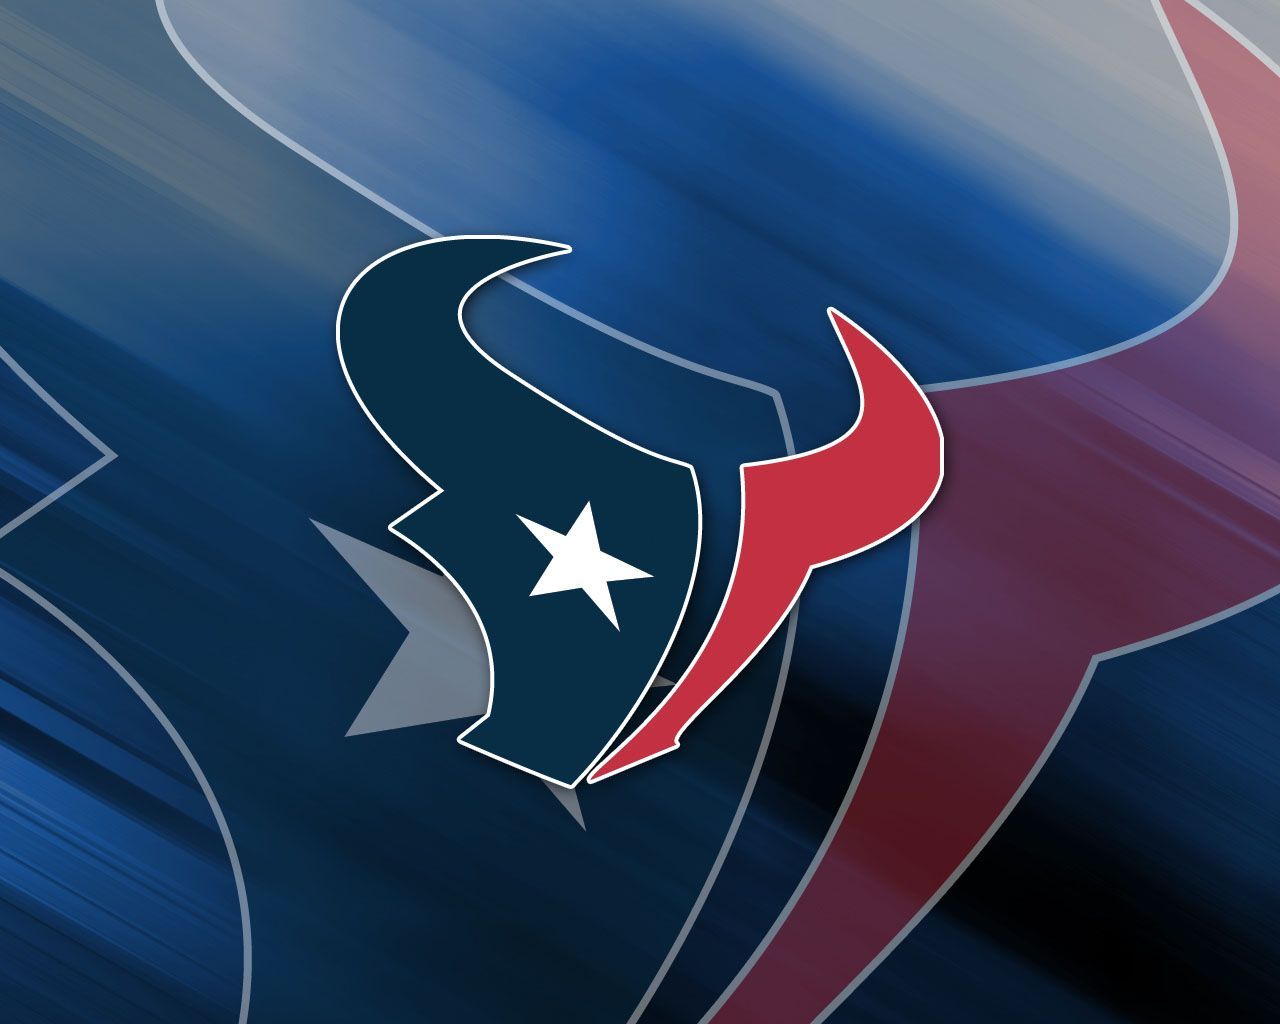 Free download Houston texans team logo wallpaper 1280 1024 nfl